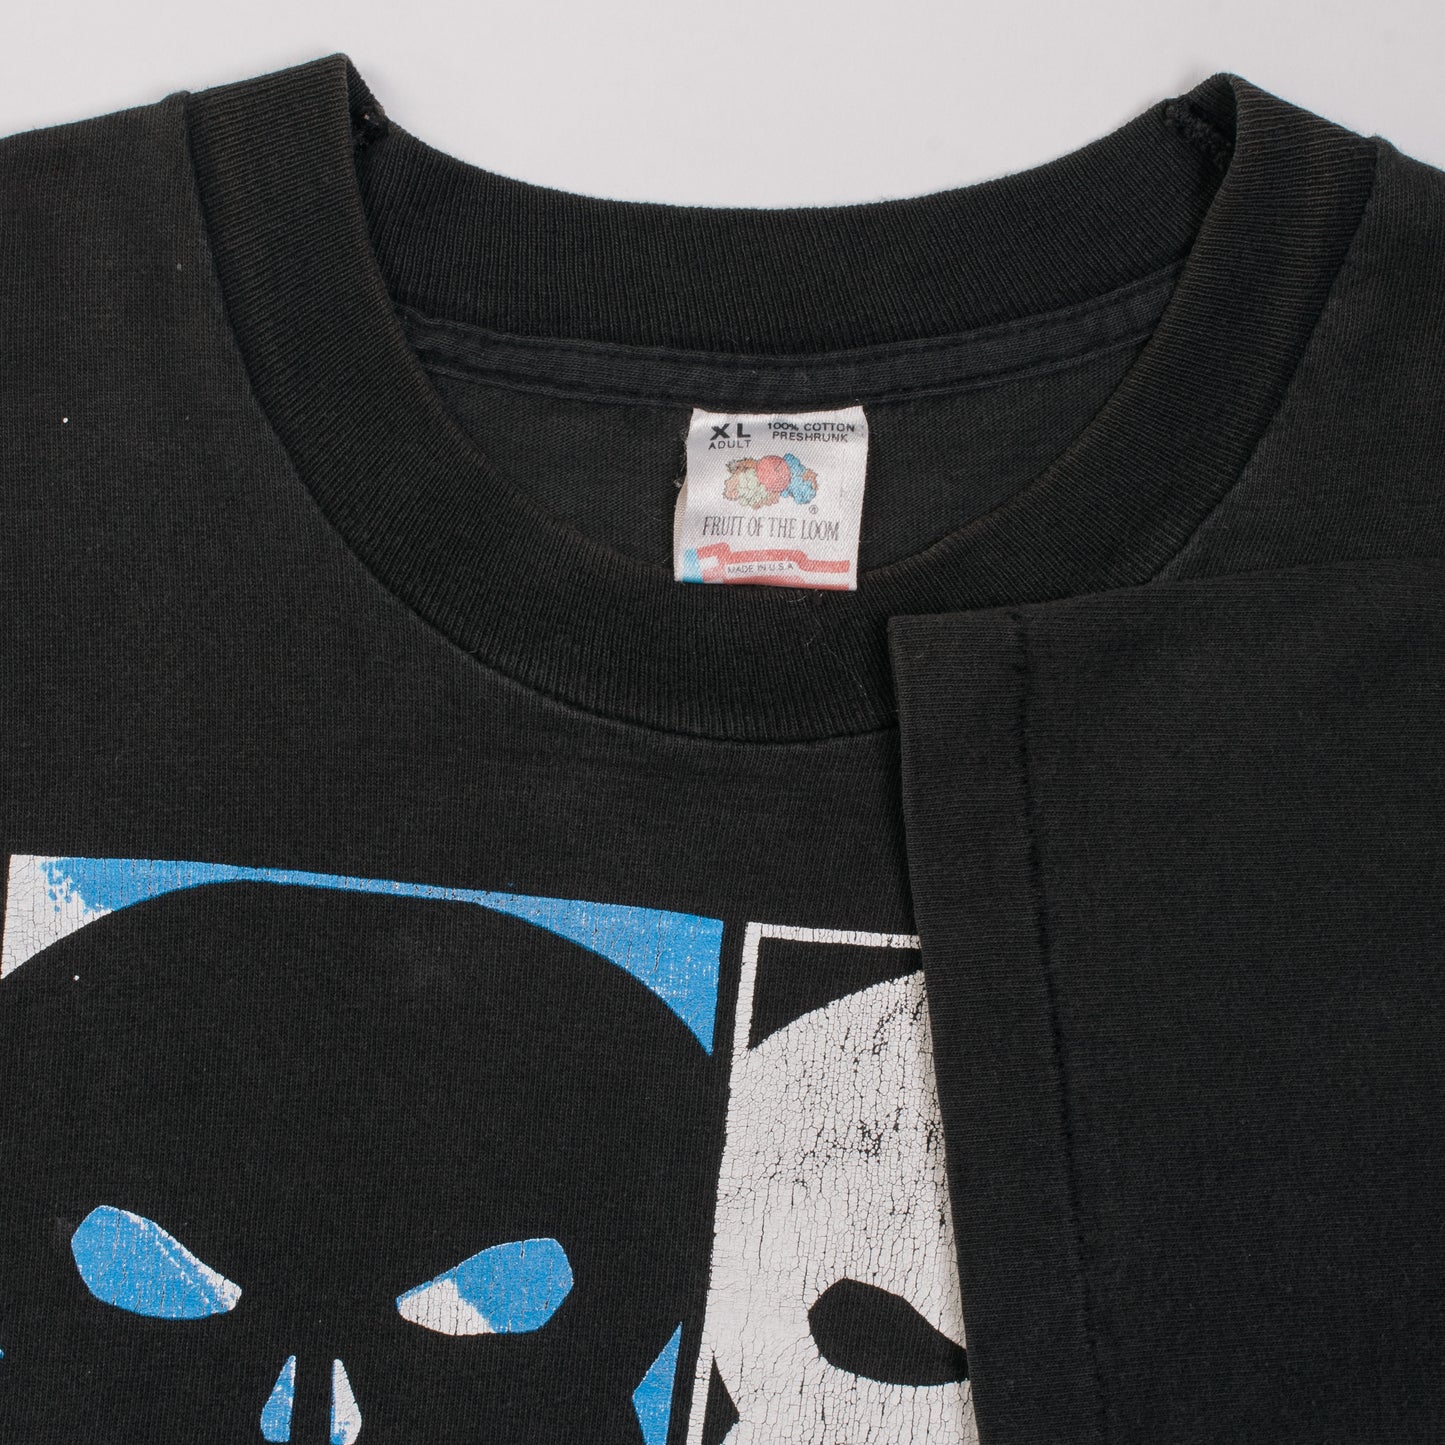 Vintage 1992 Punisher Comic Book T-Shirt